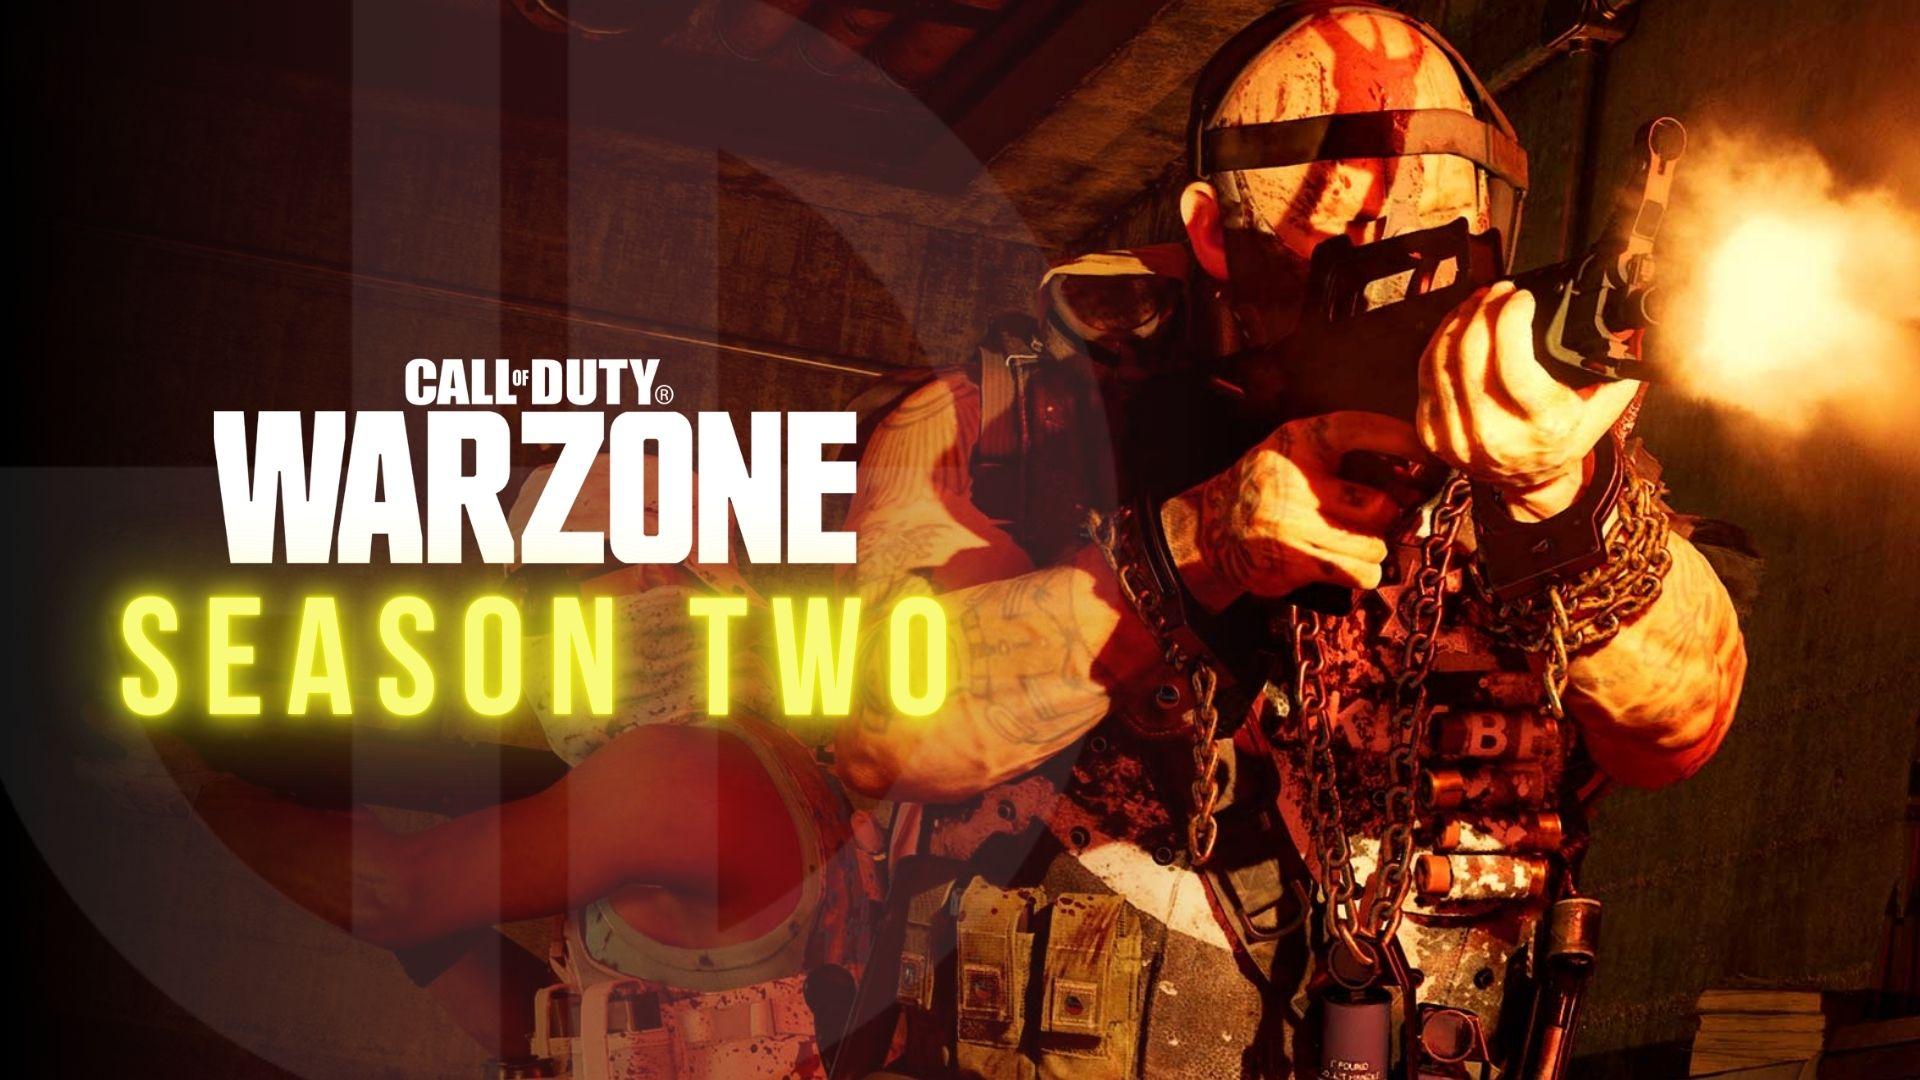 Warzone season 2